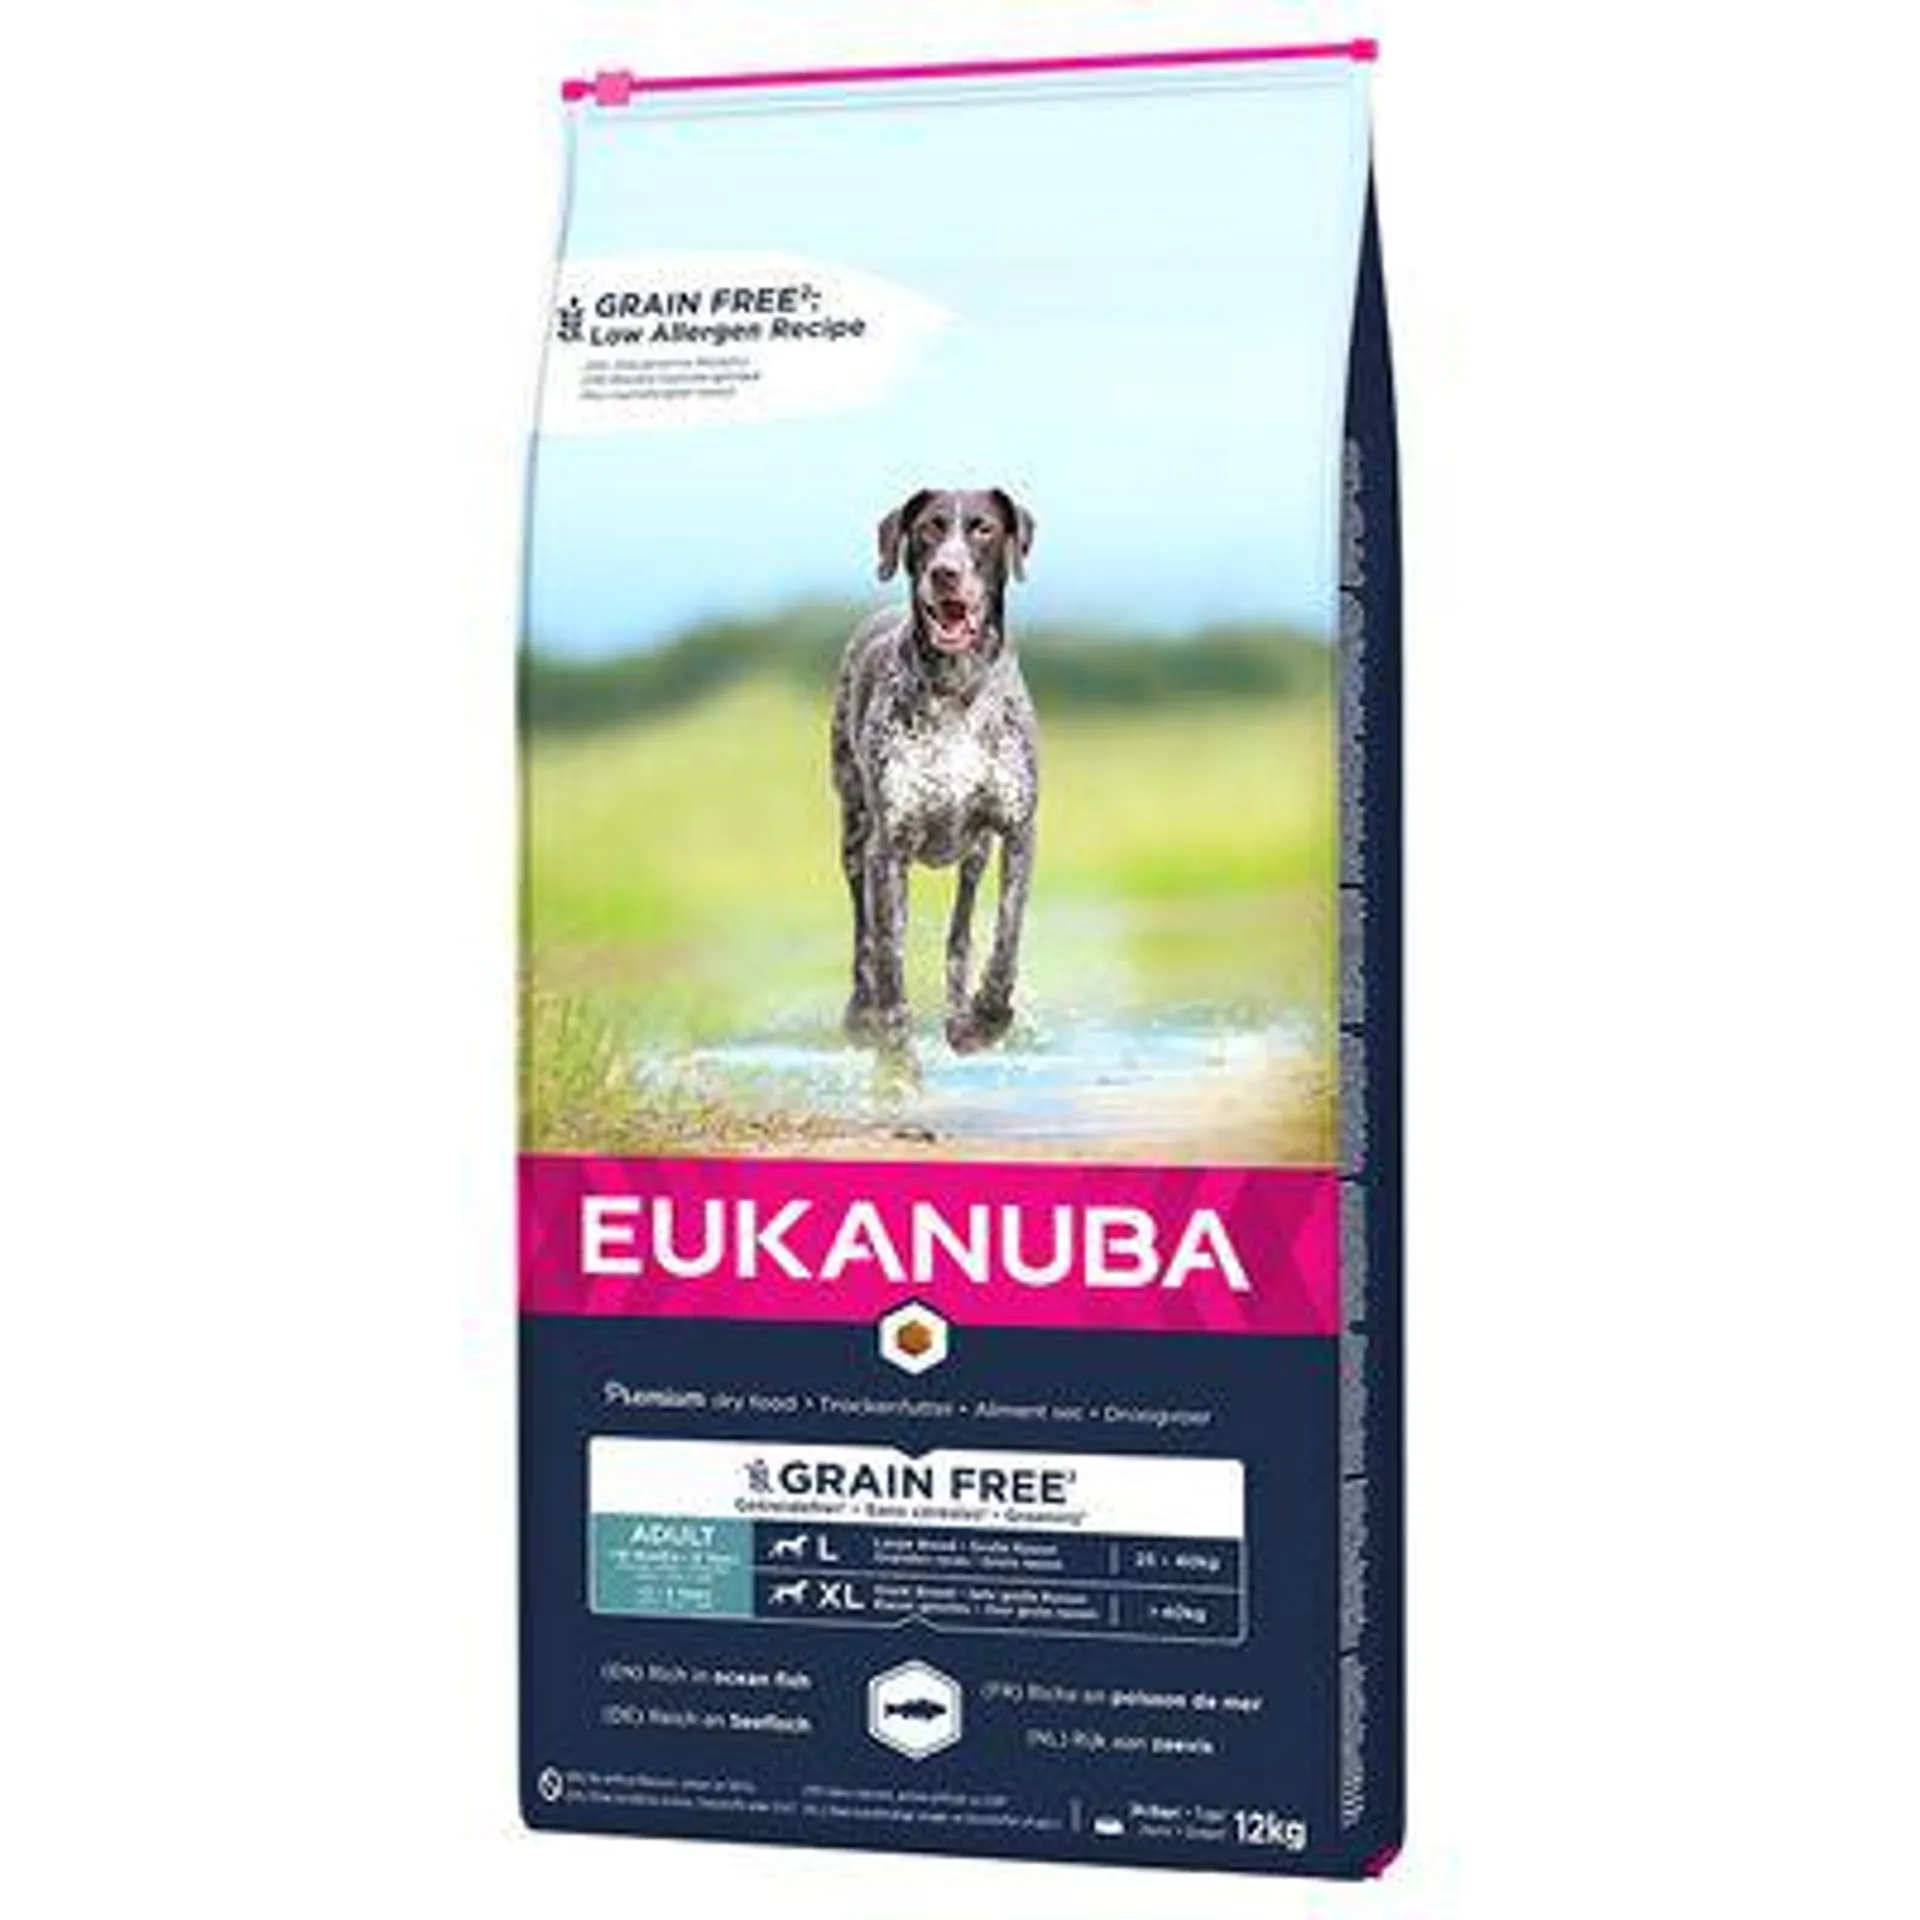 12kg Eukanuba Grain Free Adult/Puppy Dry Dog Food - 10% Off! *